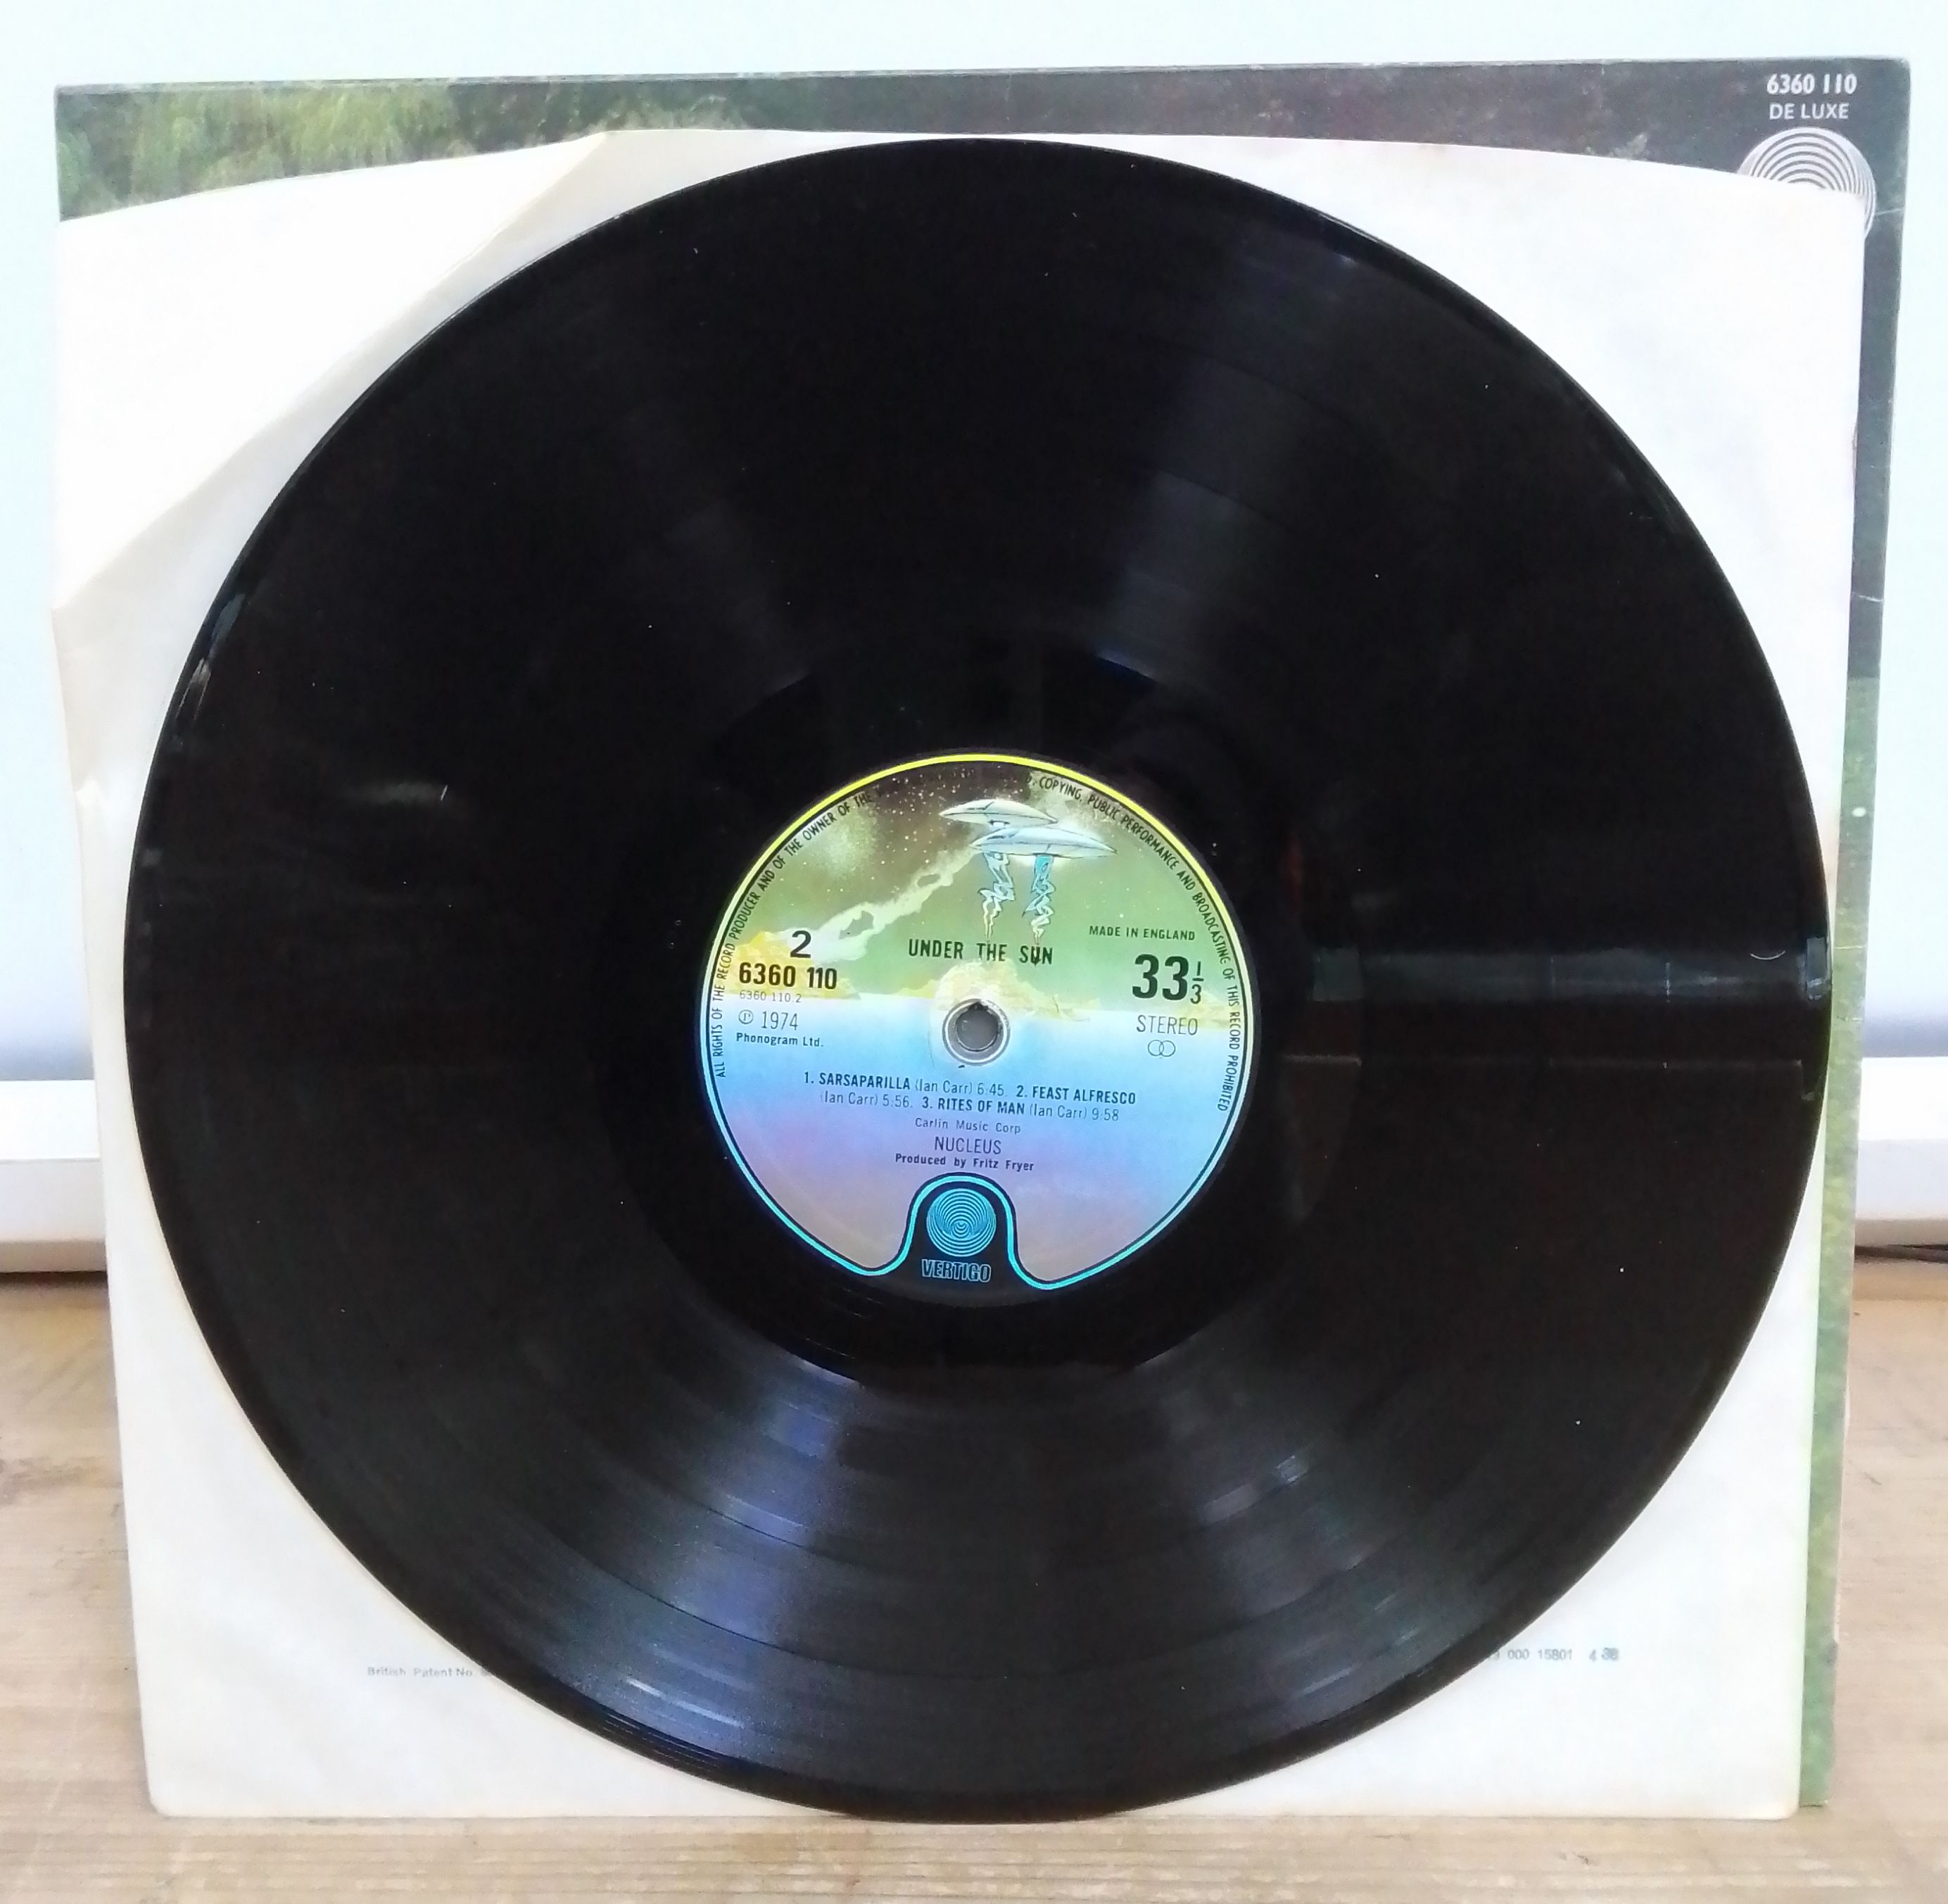 Nucleus - Under The Sun, stereo LP, 1st pressing, UK 1974, Vertigo 6360 110 - Image 4 of 4